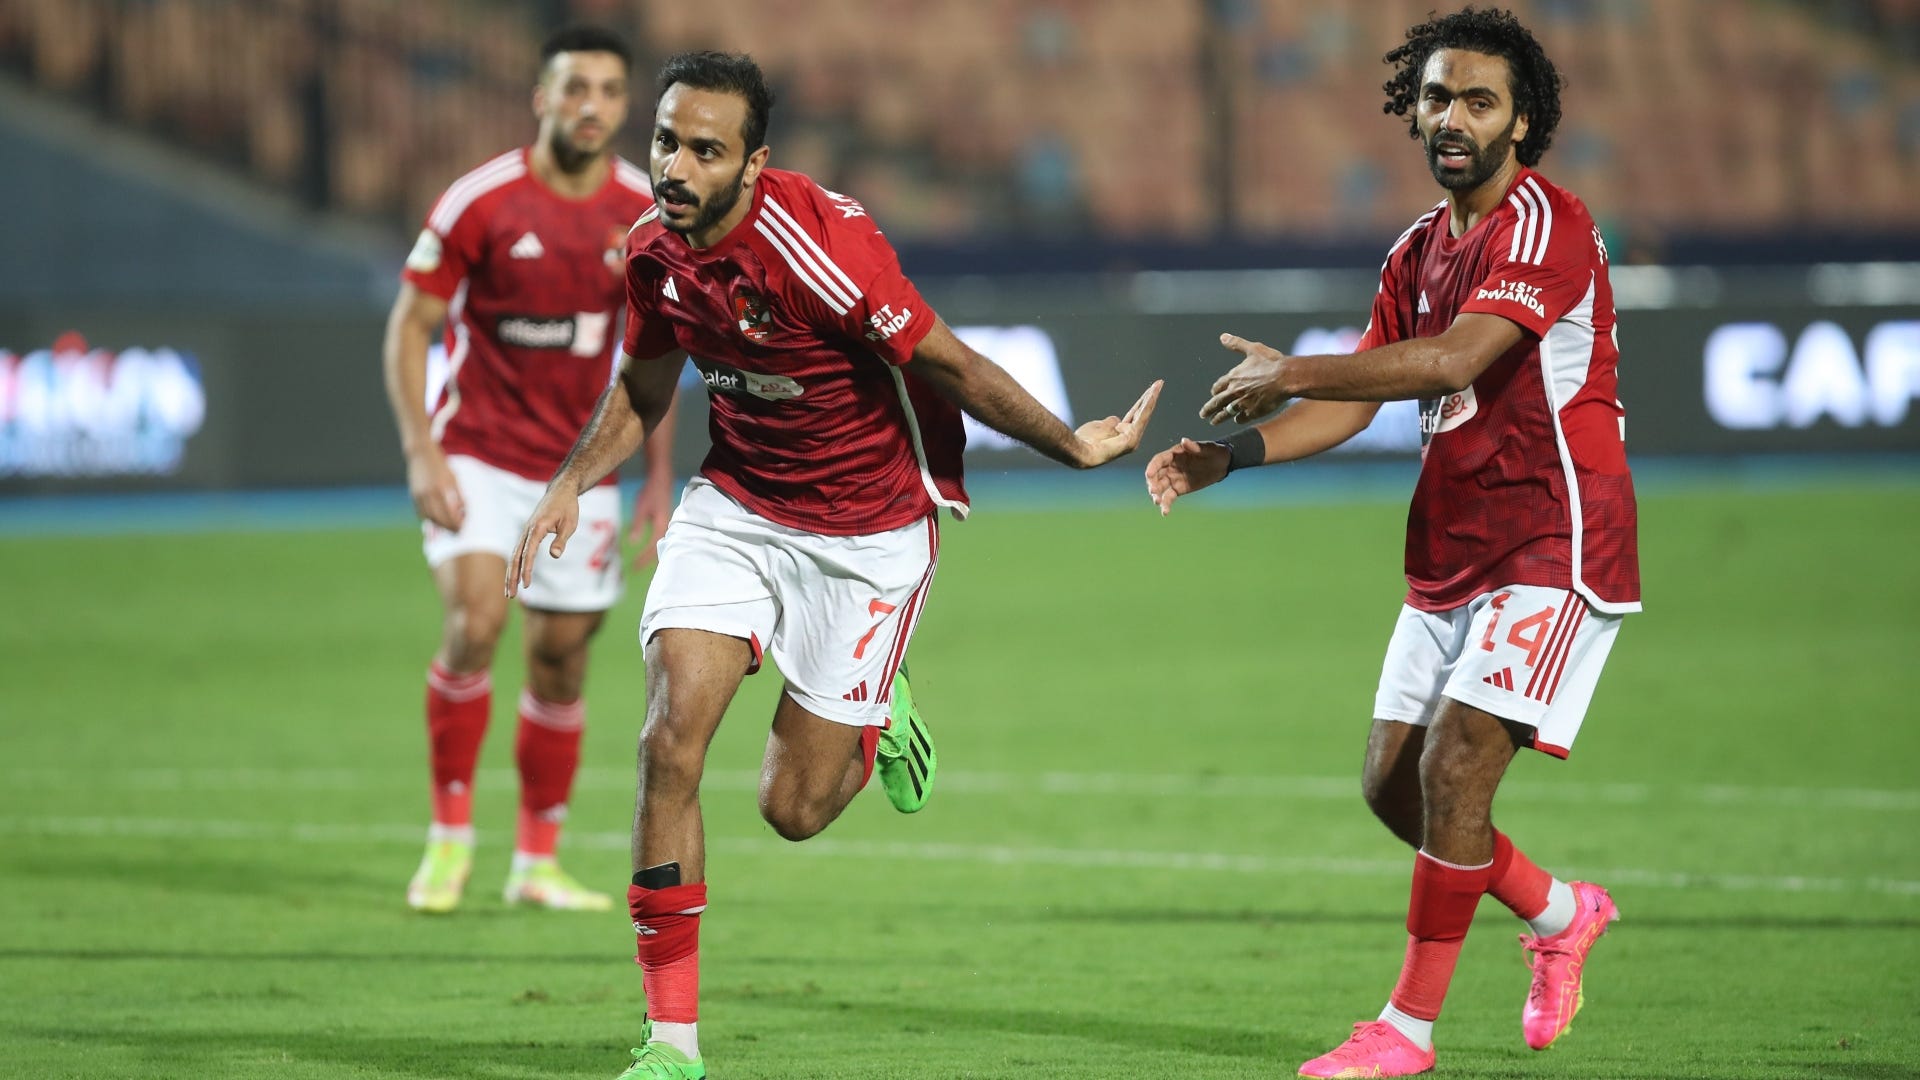 Al-Ahli vs Sundowns match in 2023 African Super League semi-final second leg date and broadcast channels